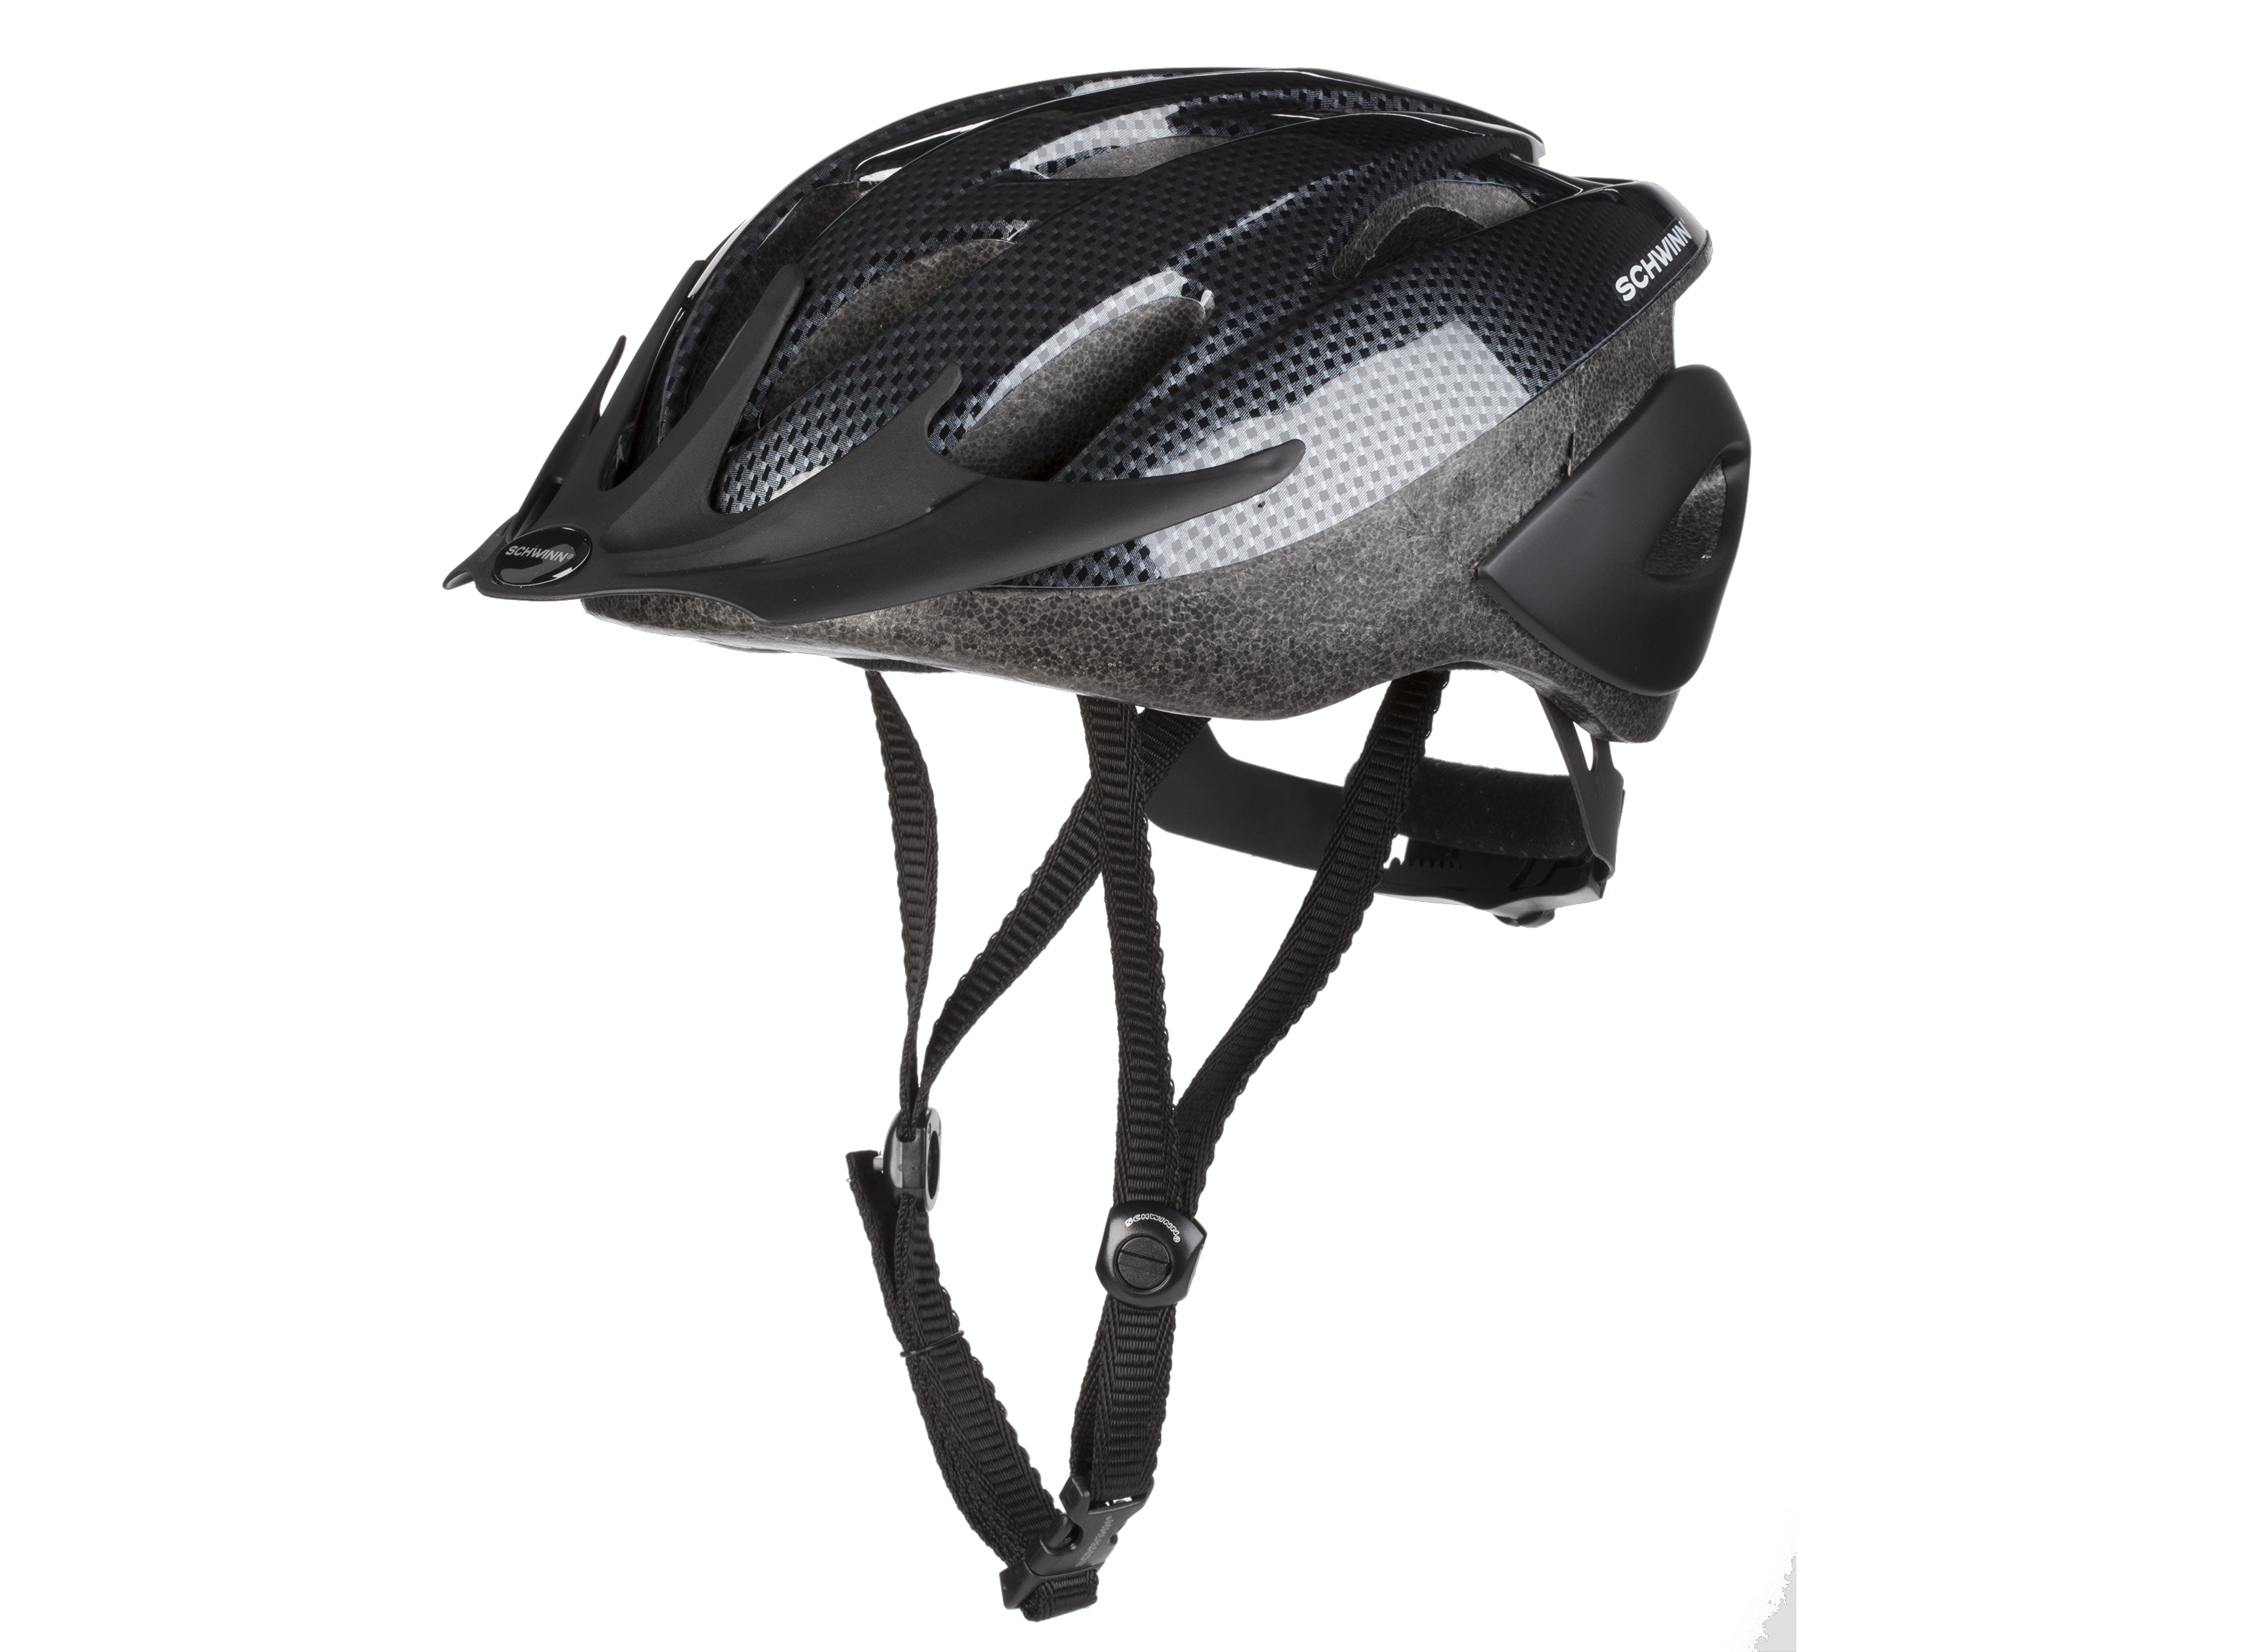 Schwinn Thrasher Adult Bike Helmet Review - Consumer Reports